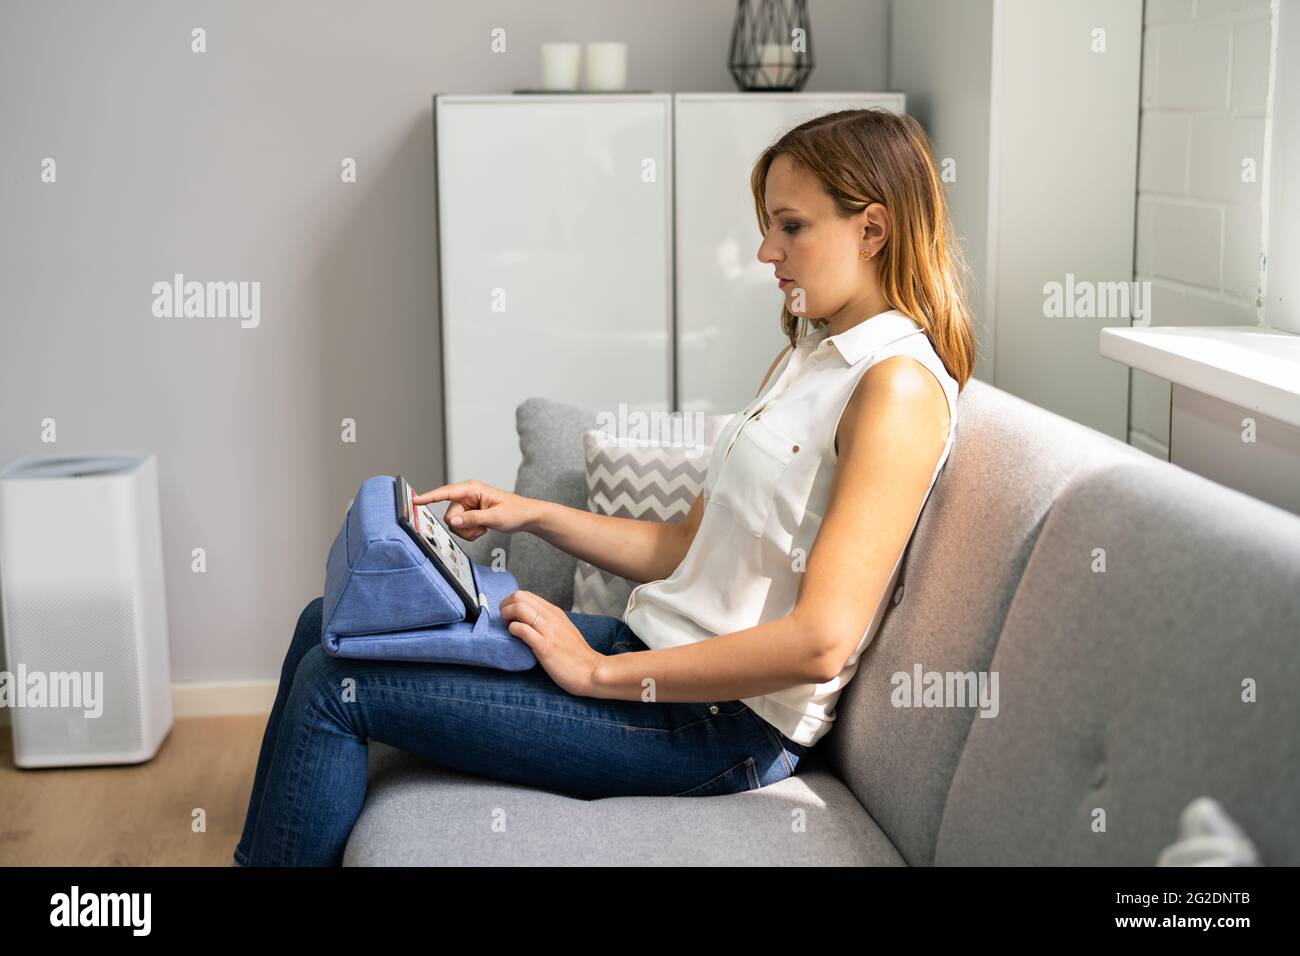 Woman Avoiding Neck Pain Sitting With Good Posture Stock Photo